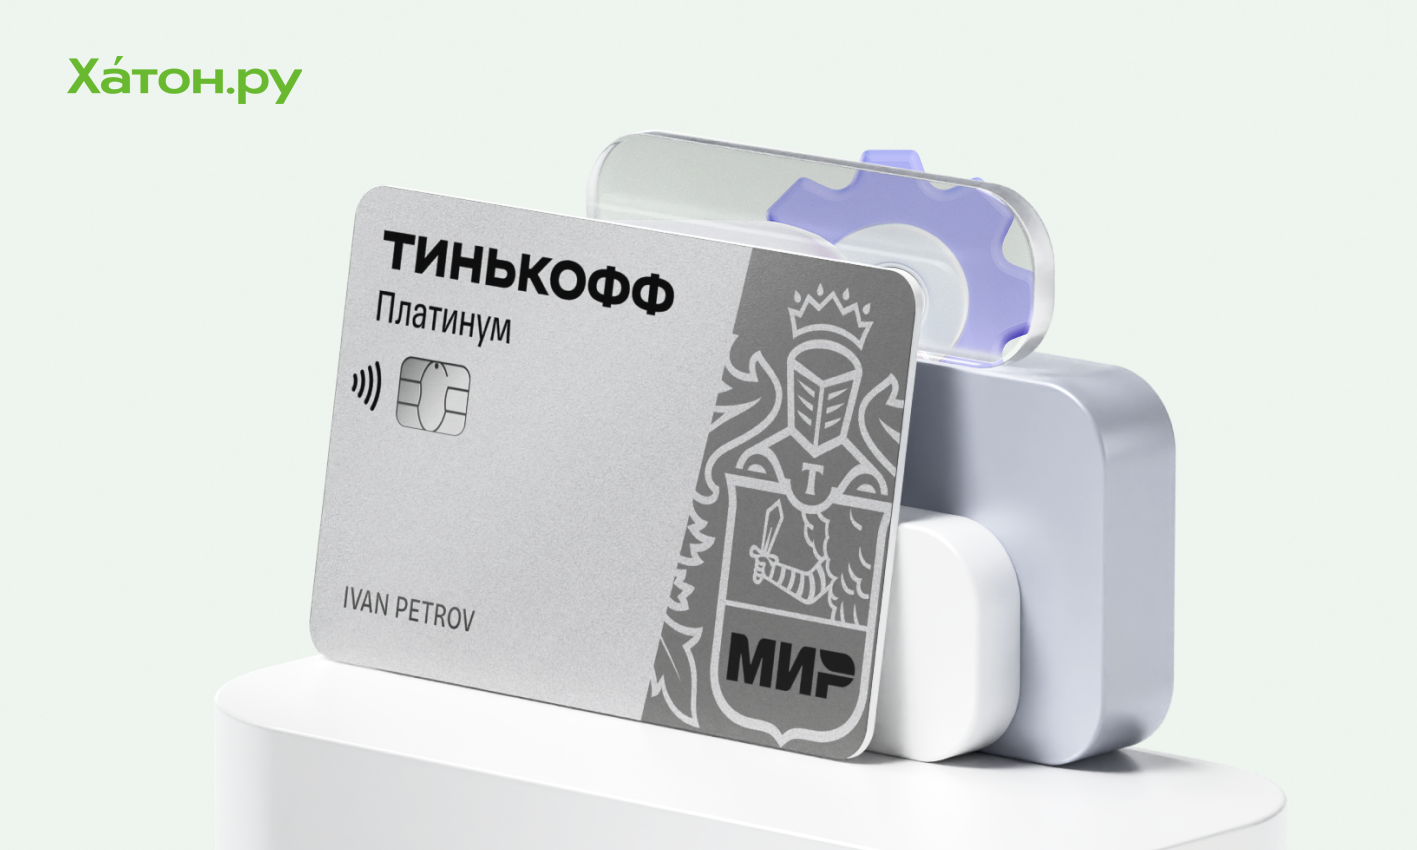 Как потратить бонусные баллы с карты Tinkoff Platinum?